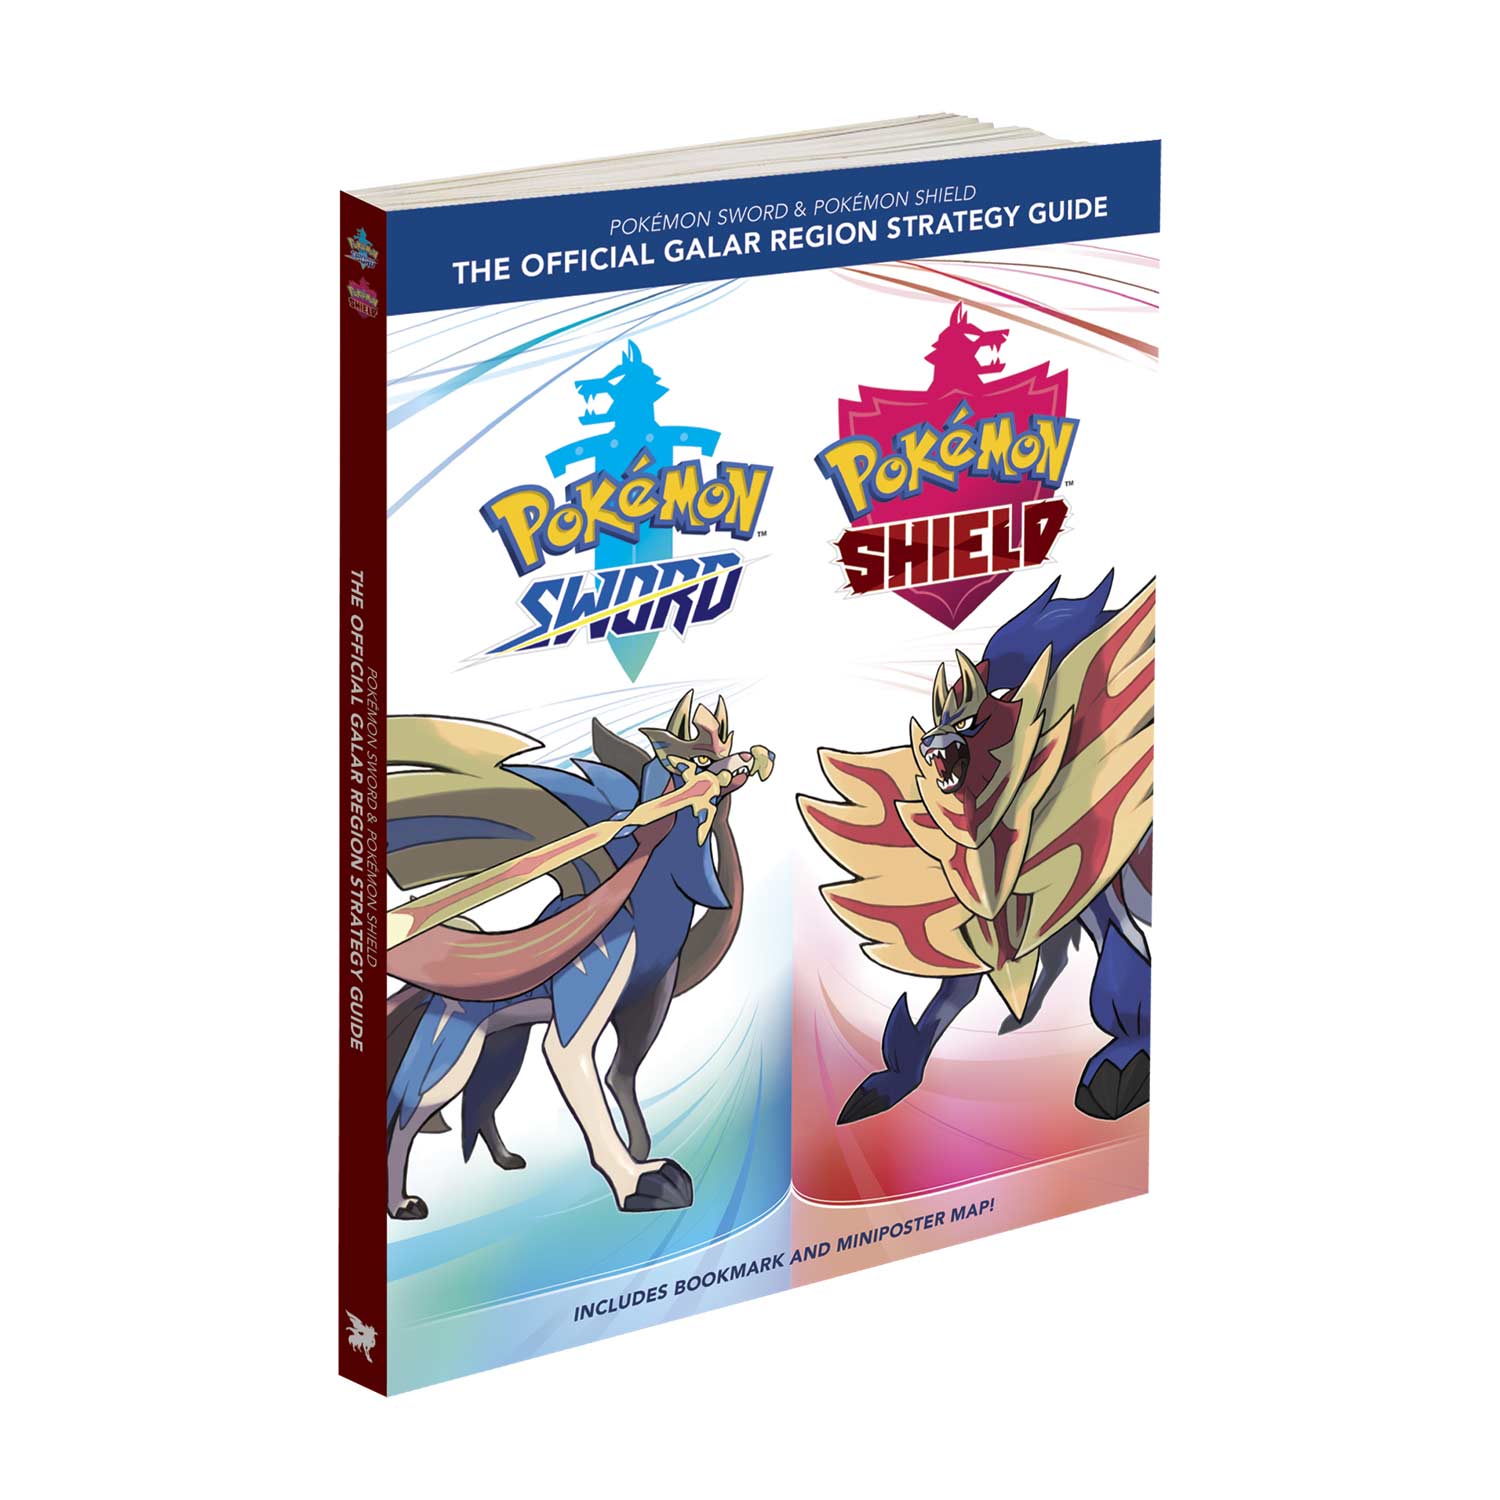 Pokémon Sword Pokémon Shield The Official Galar Region Strategy Guide